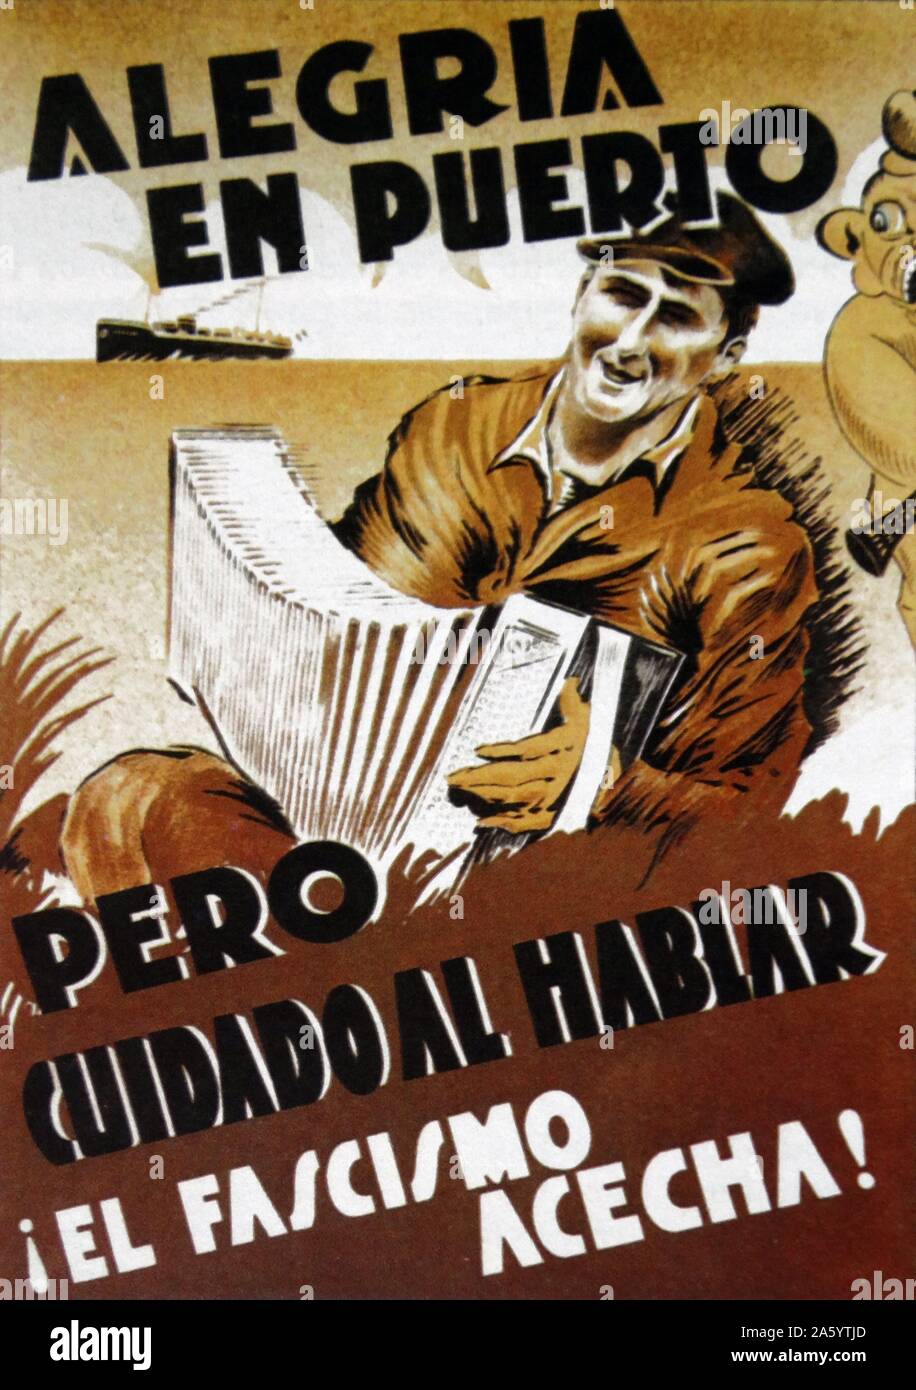 Republican propaganda warning during the Spanish Civil War. 'Alegria en puerto; pero cuidado al hablar; el fascismo acecha' (joy in port. but be careful when talking. Fascism lurks) Stock Photo